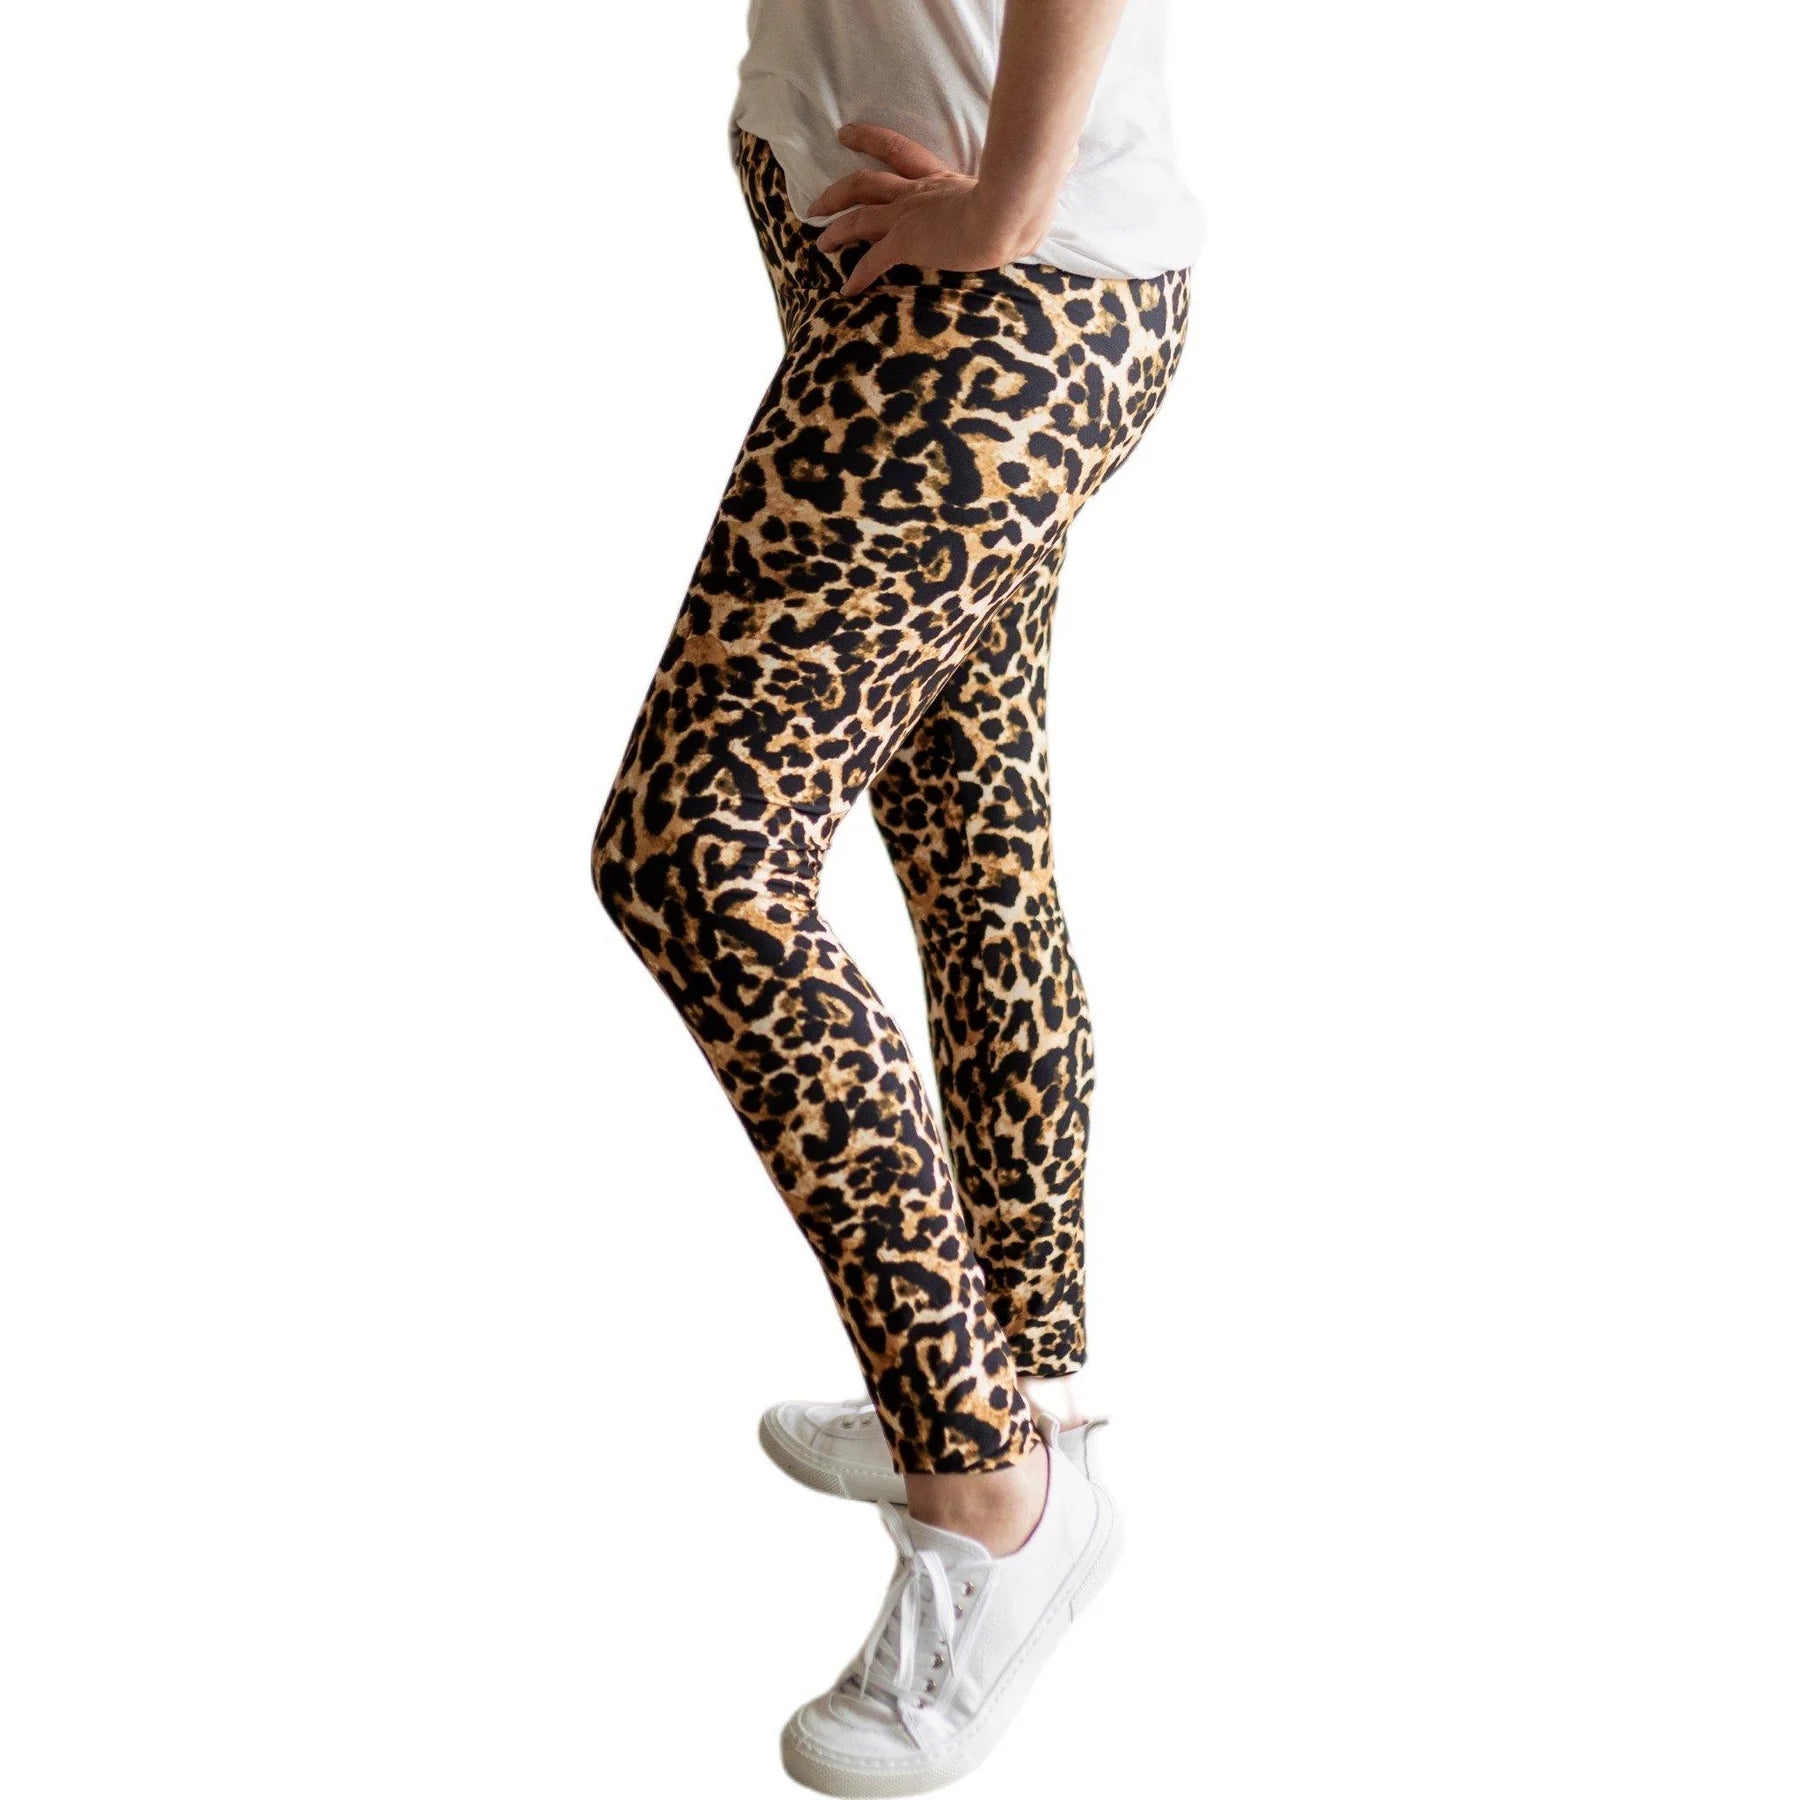 Everyday Yoga Girls Uphold Cheetah High Waisted Leggings With